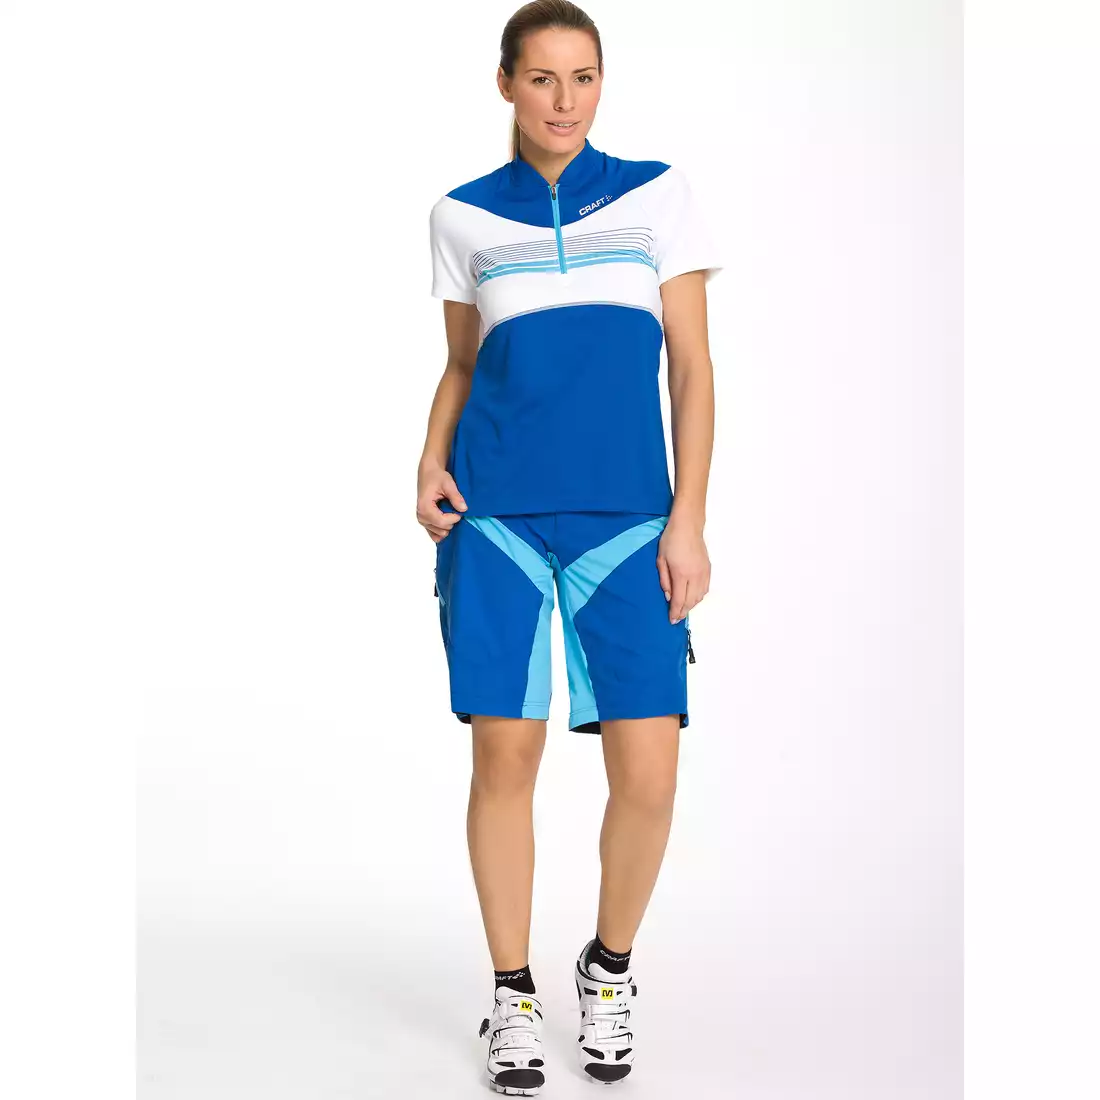 CRAFT ACTIVE BIKE - damska koszulka rowerowa 1901942-2345, kolor: biało-niebieski